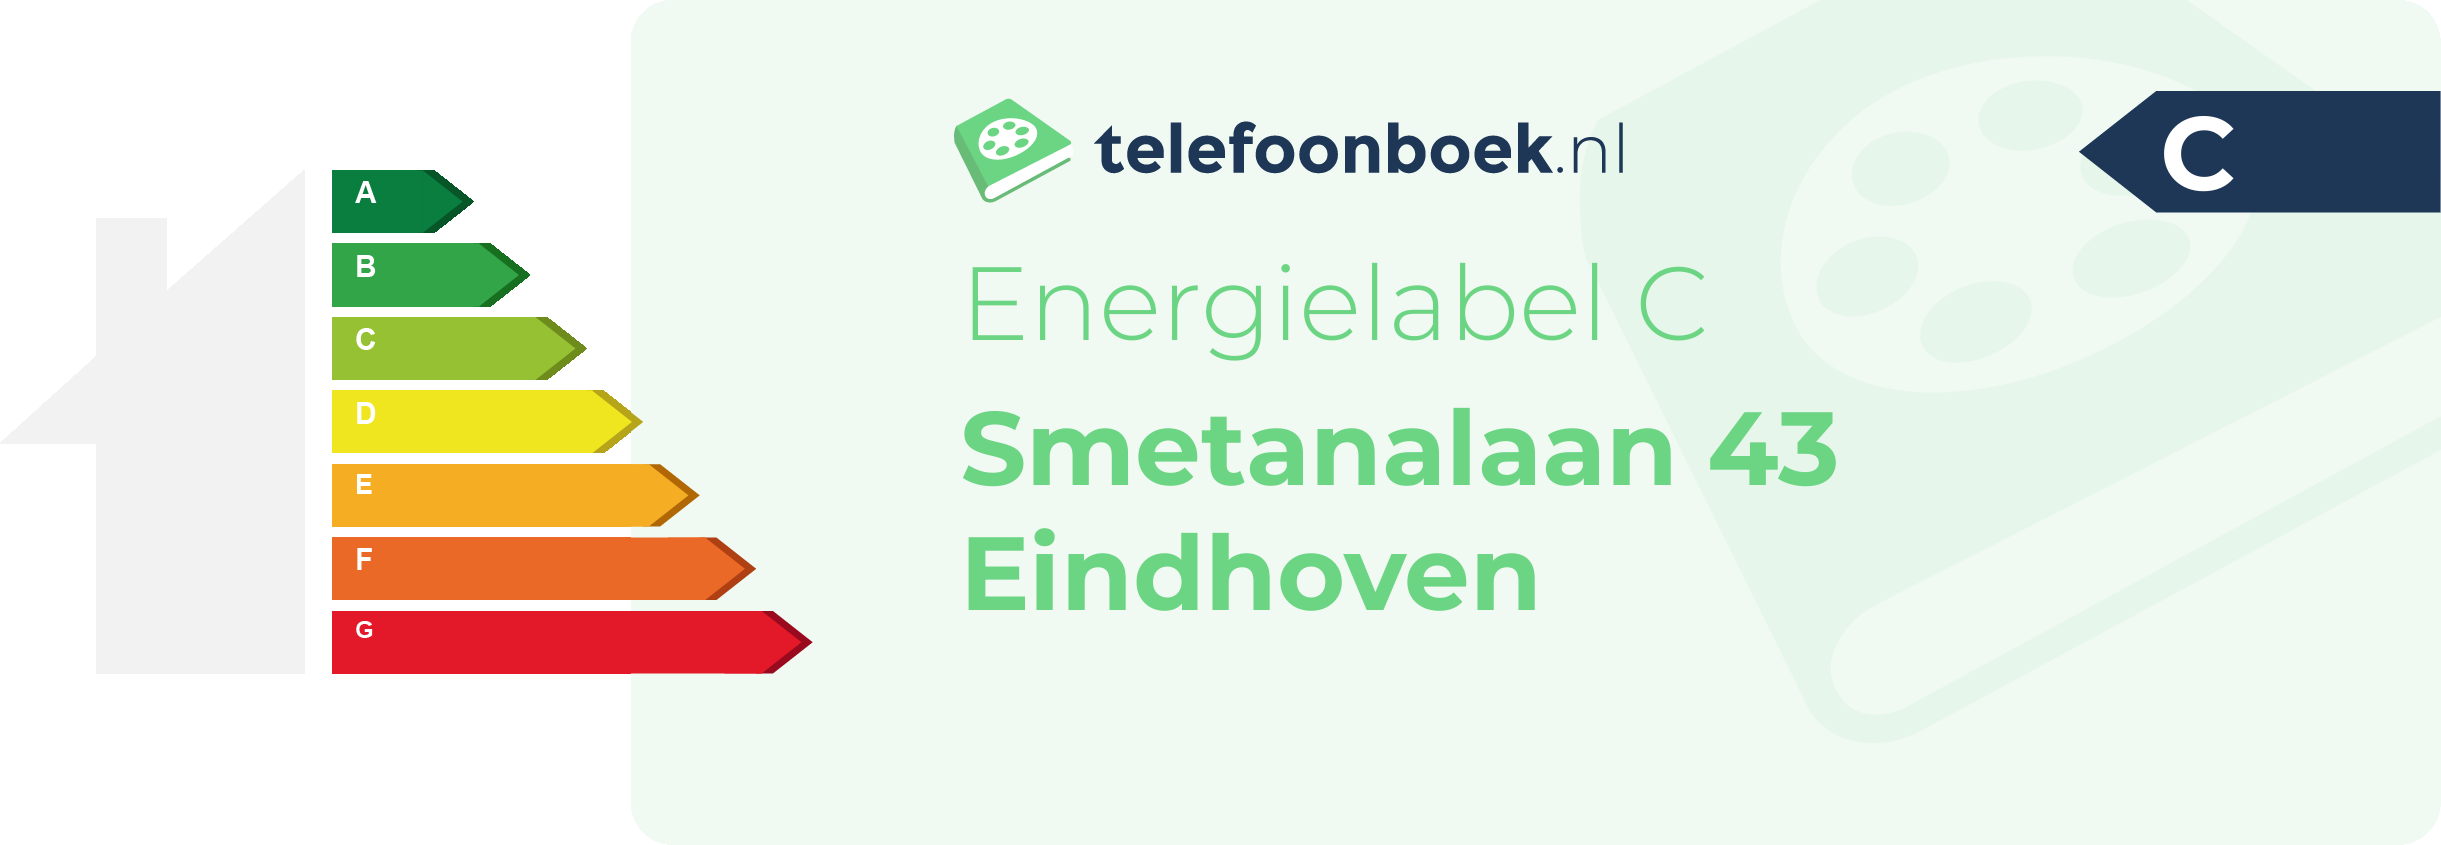 Energielabel Smetanalaan 43 Eindhoven